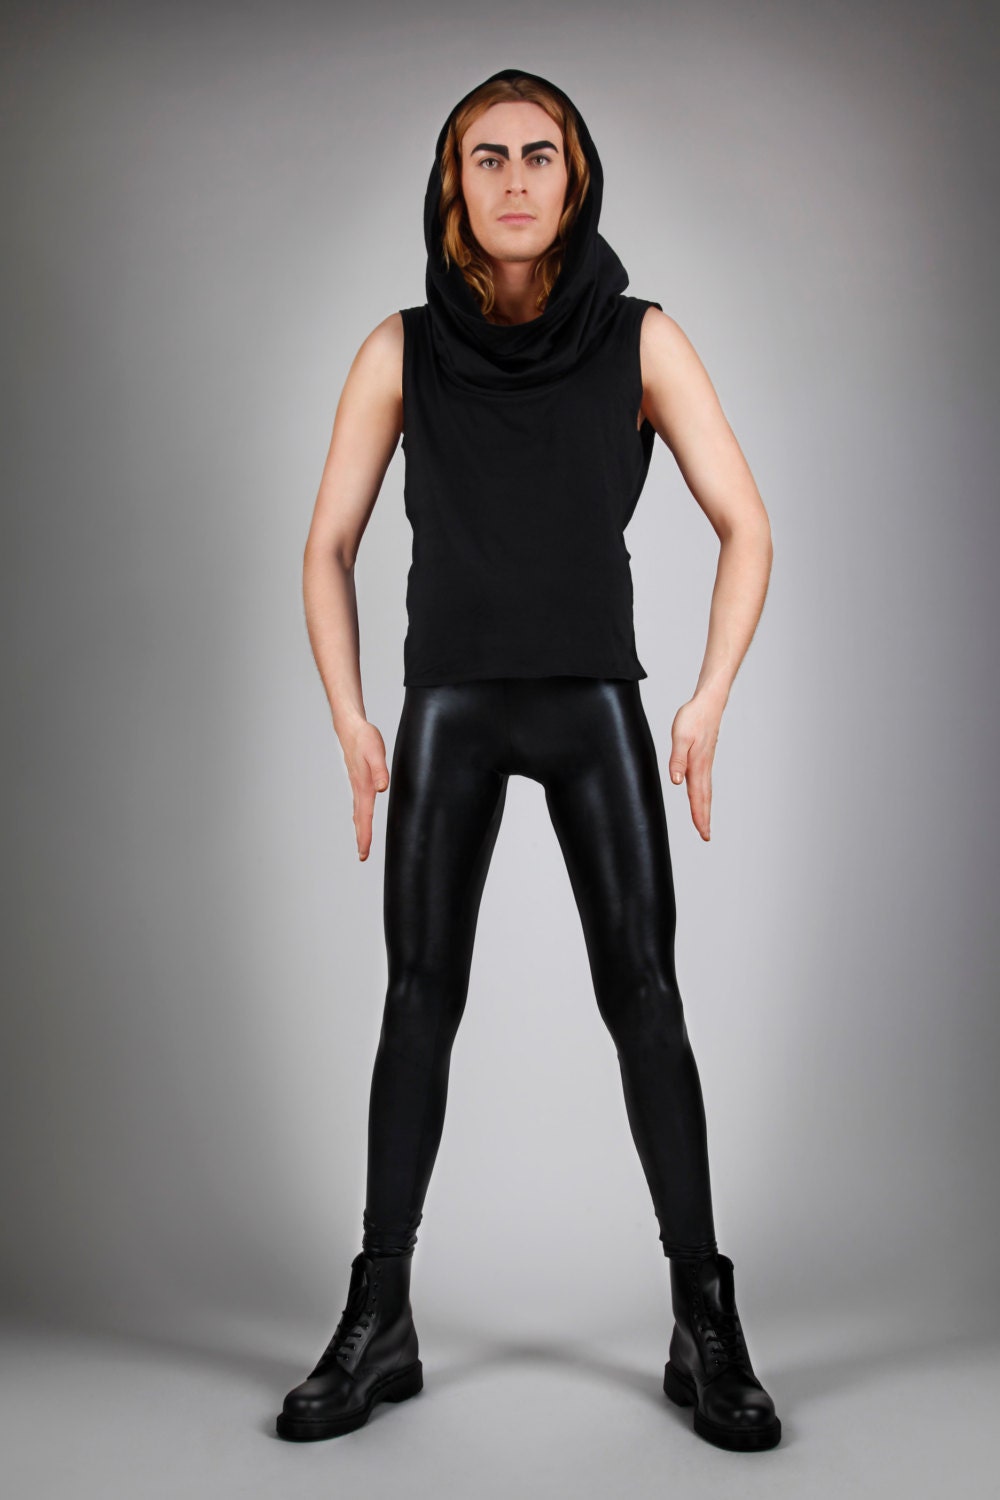 UK Men Patent Leather Metallic Shiny Leggings Trouser for Disco Clubwear  Costume | eBay